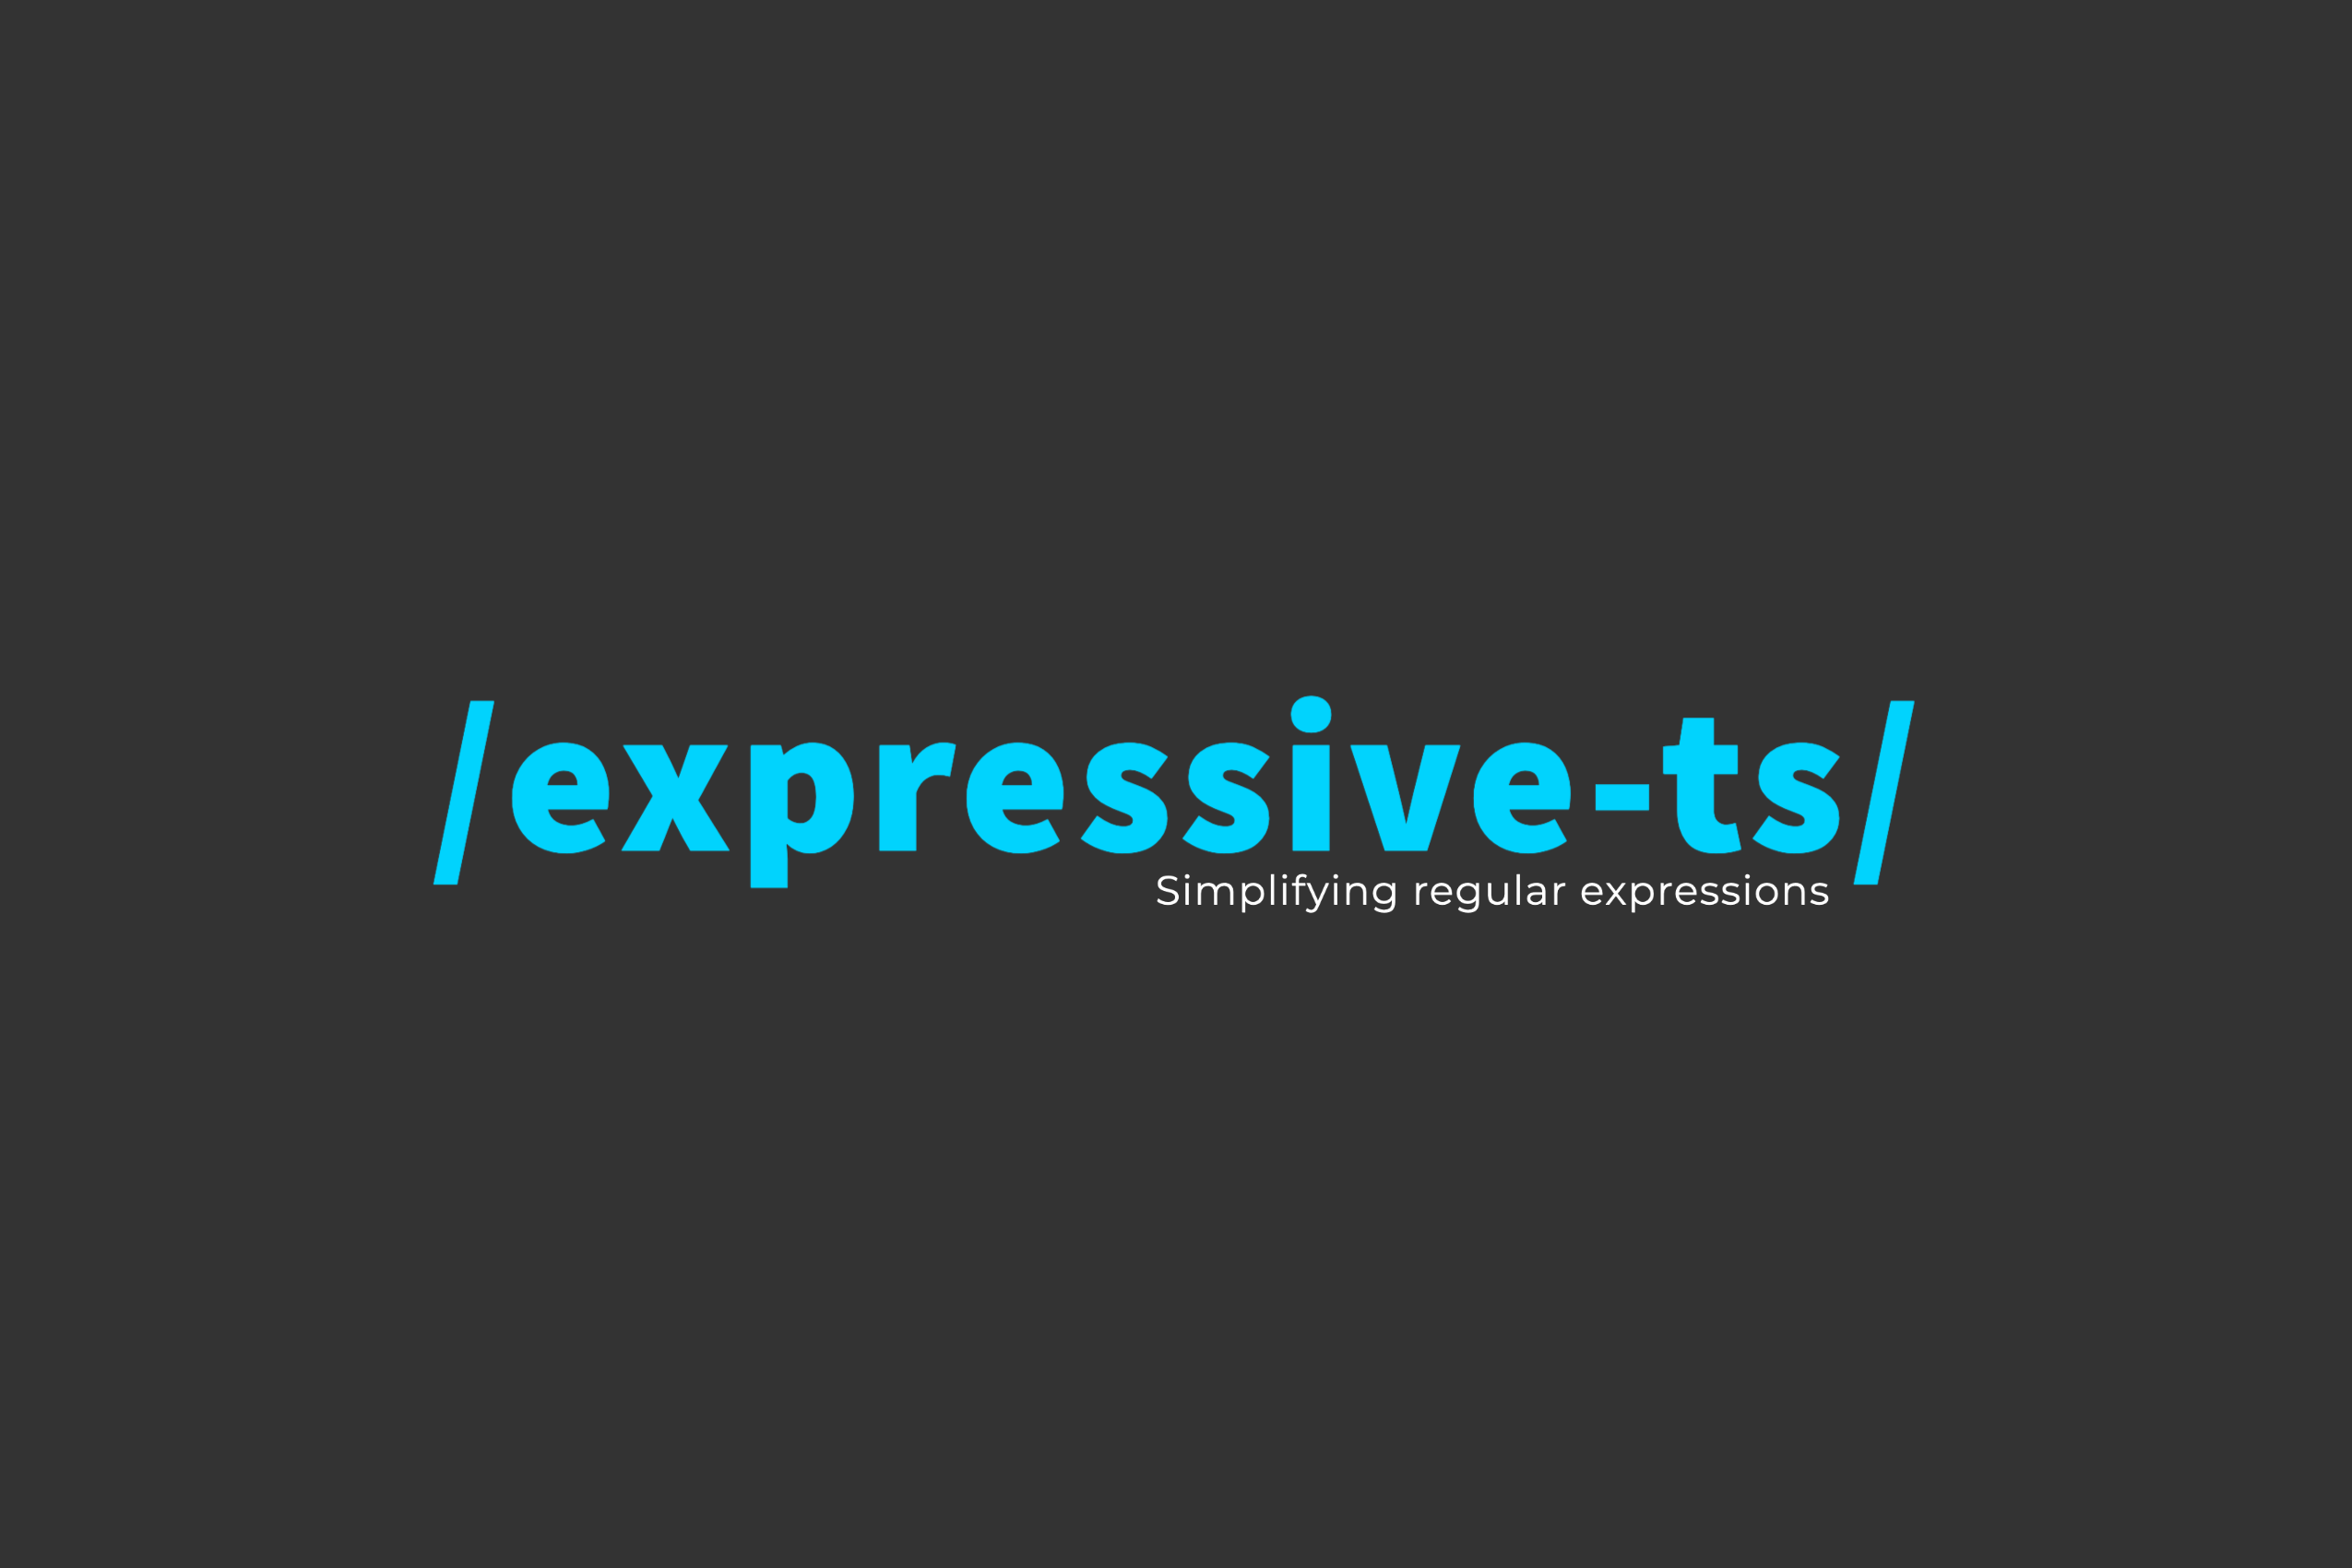 Expressive-ts Logo